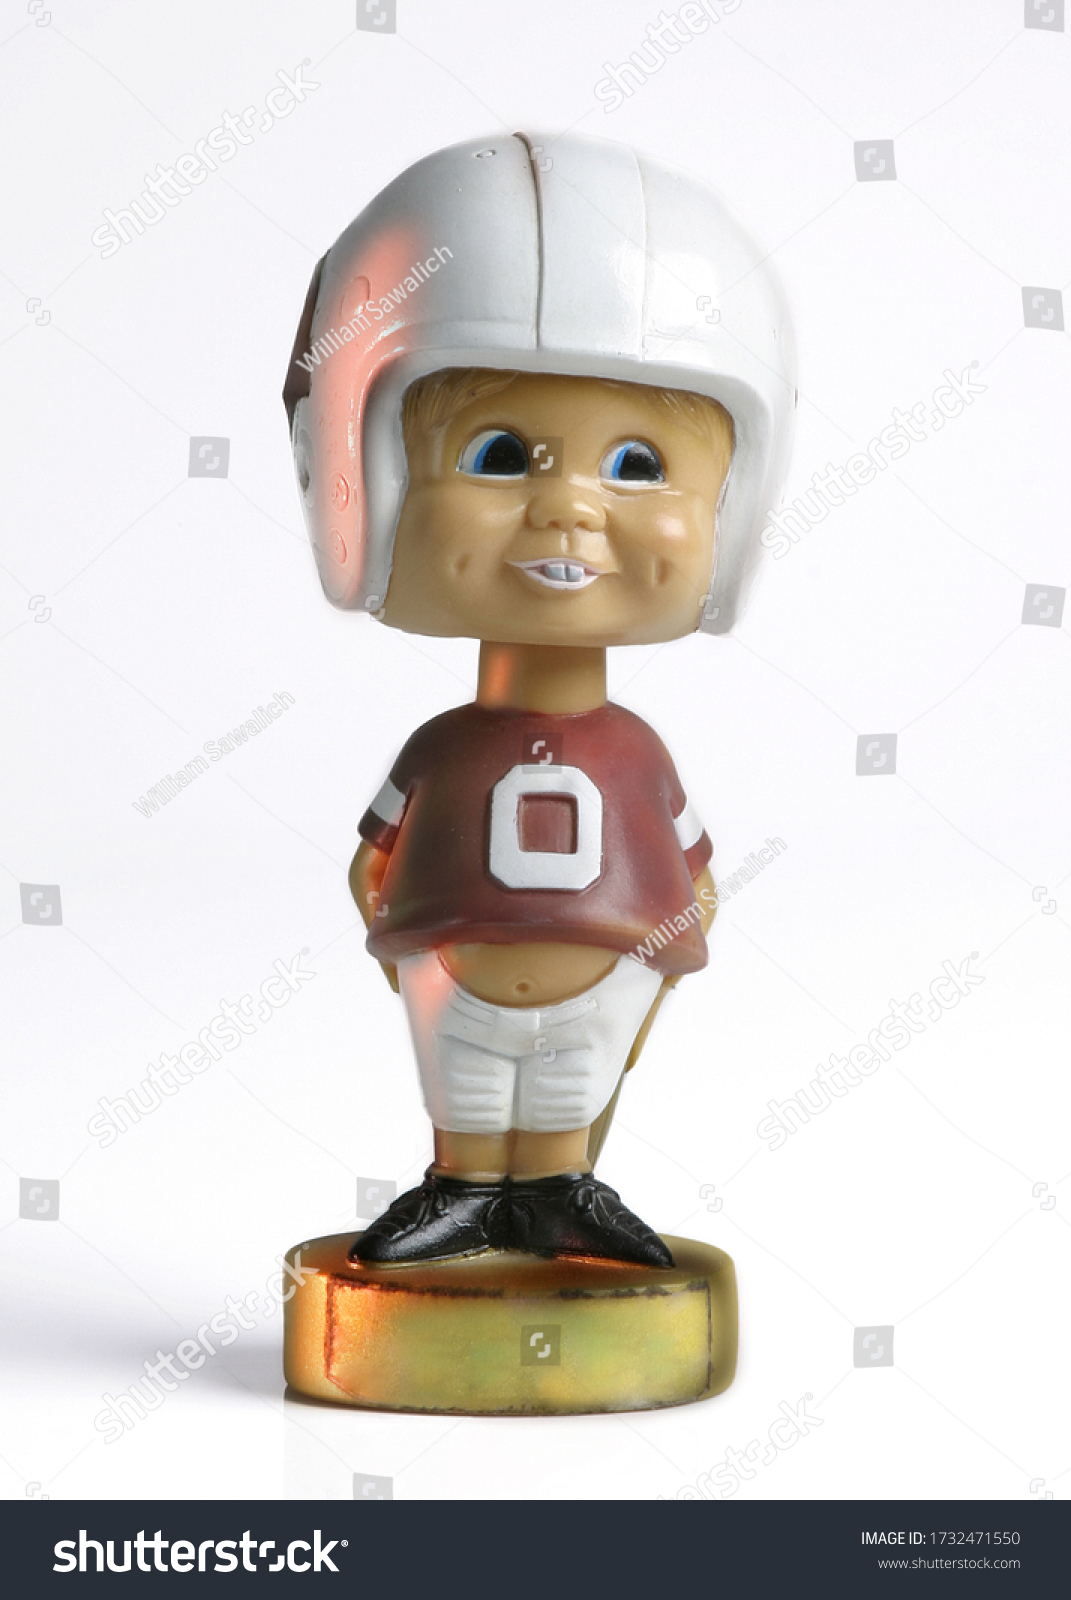 A vintage football player bobble head doll. #1732471550